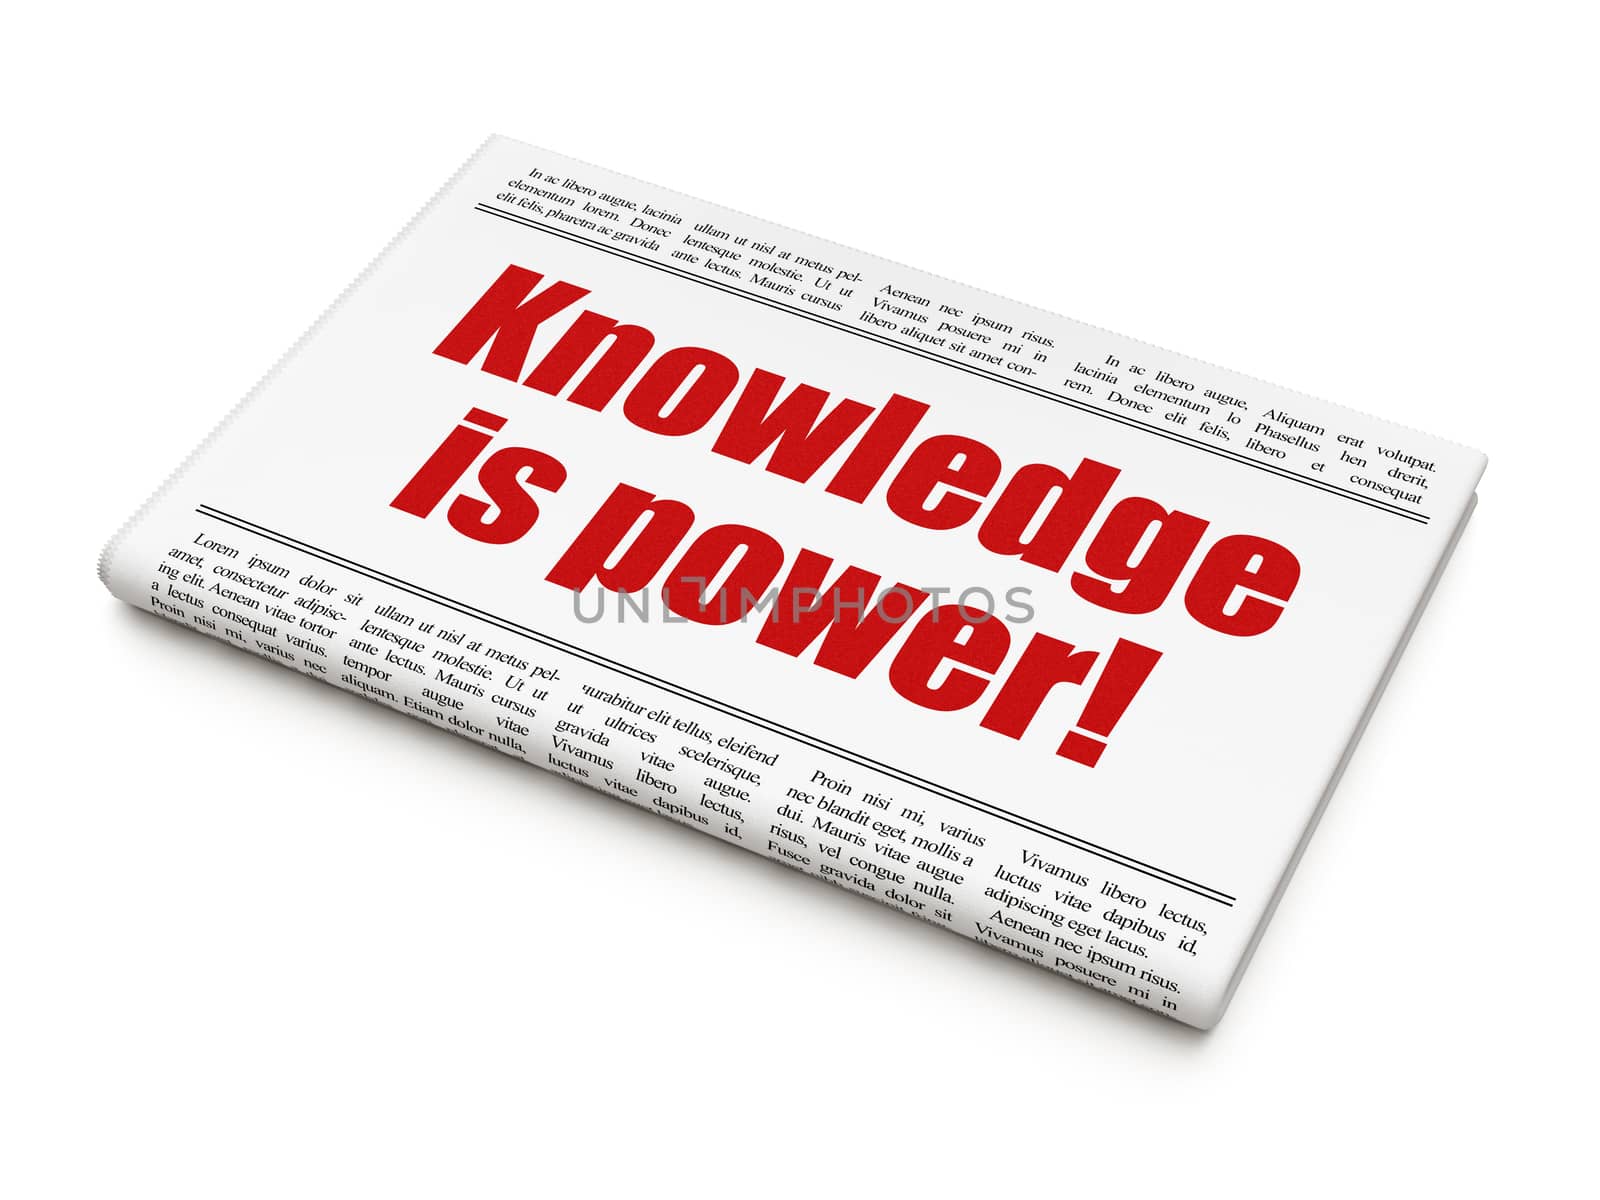 Education news concept: newspaper headline Knowledge Is power! by maxkabakov